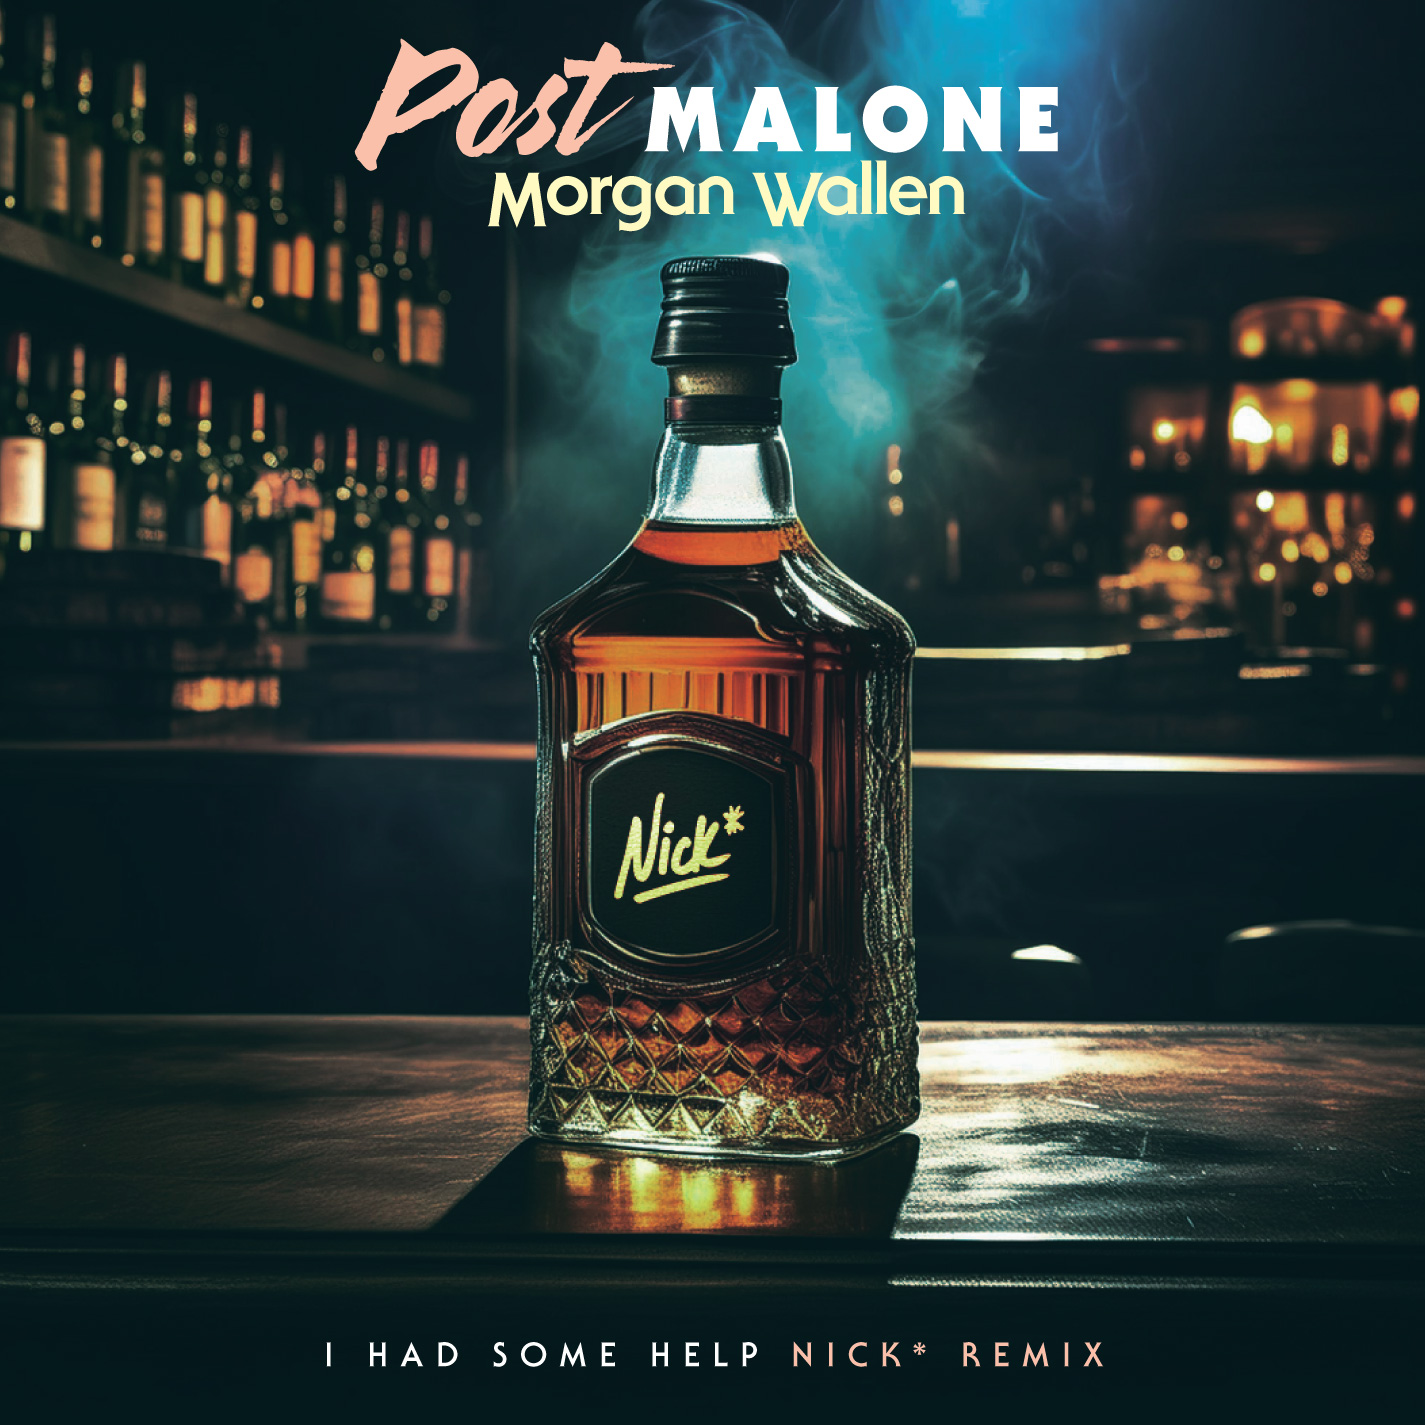 Post Malone & Morgan Wallen - I Had Some Help Nick* Remix